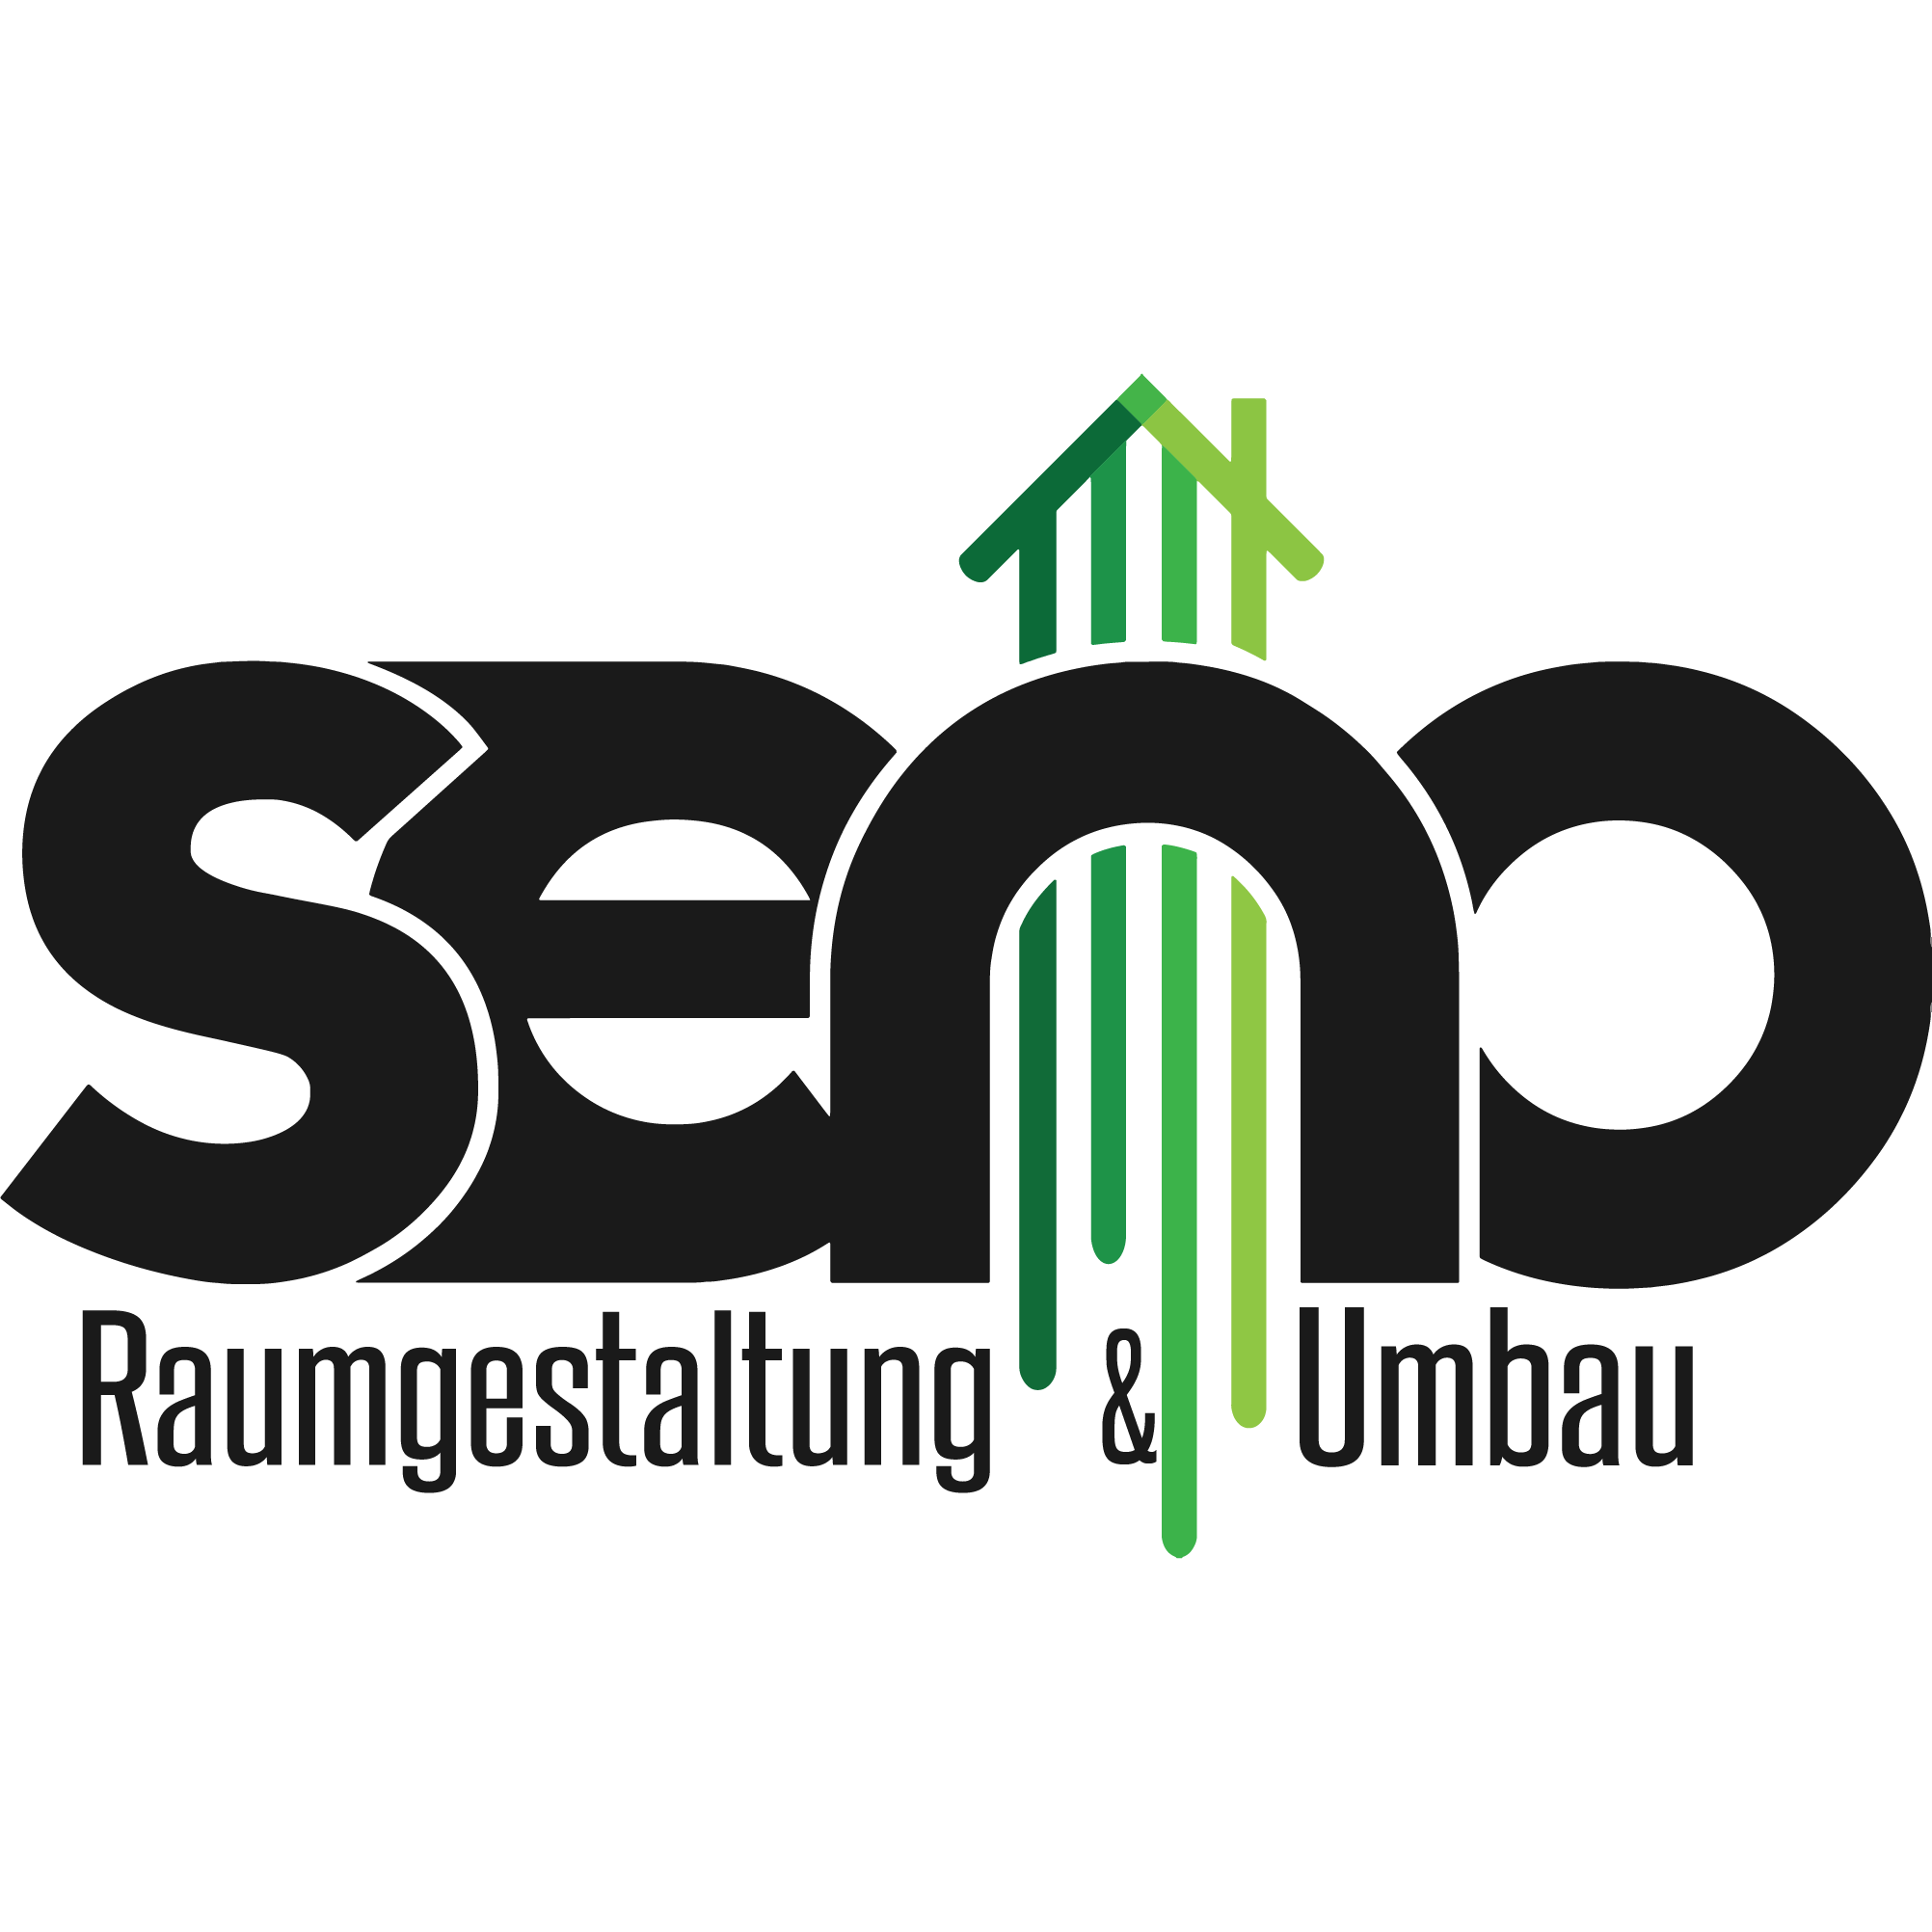 SENO (Raumgestaltung & Umbau) inh. Senad Thaqi in Herzogenaurach - Logo